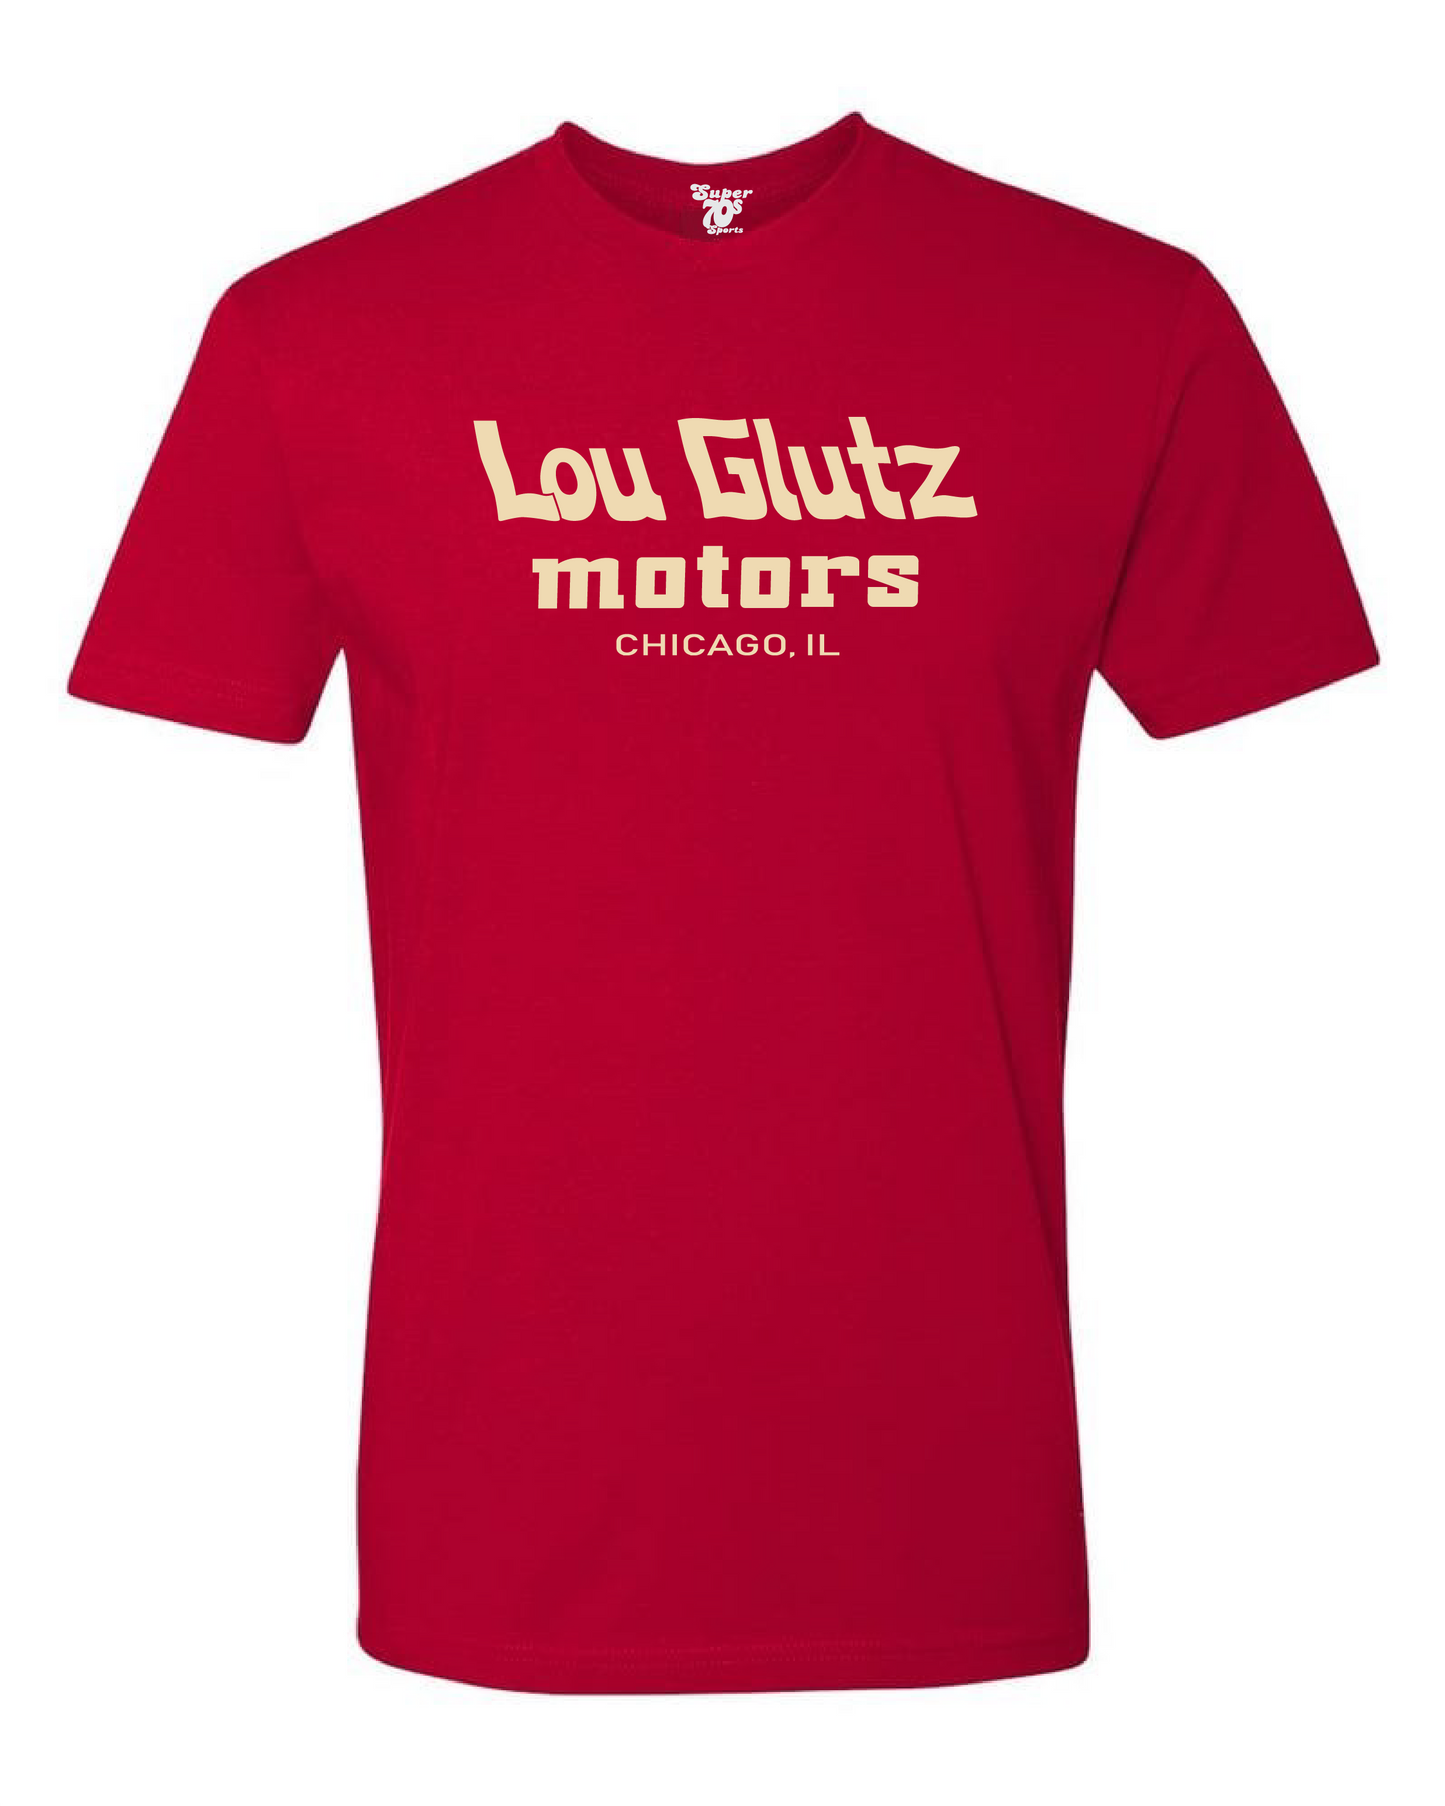 Lou Glutz Motors Tee